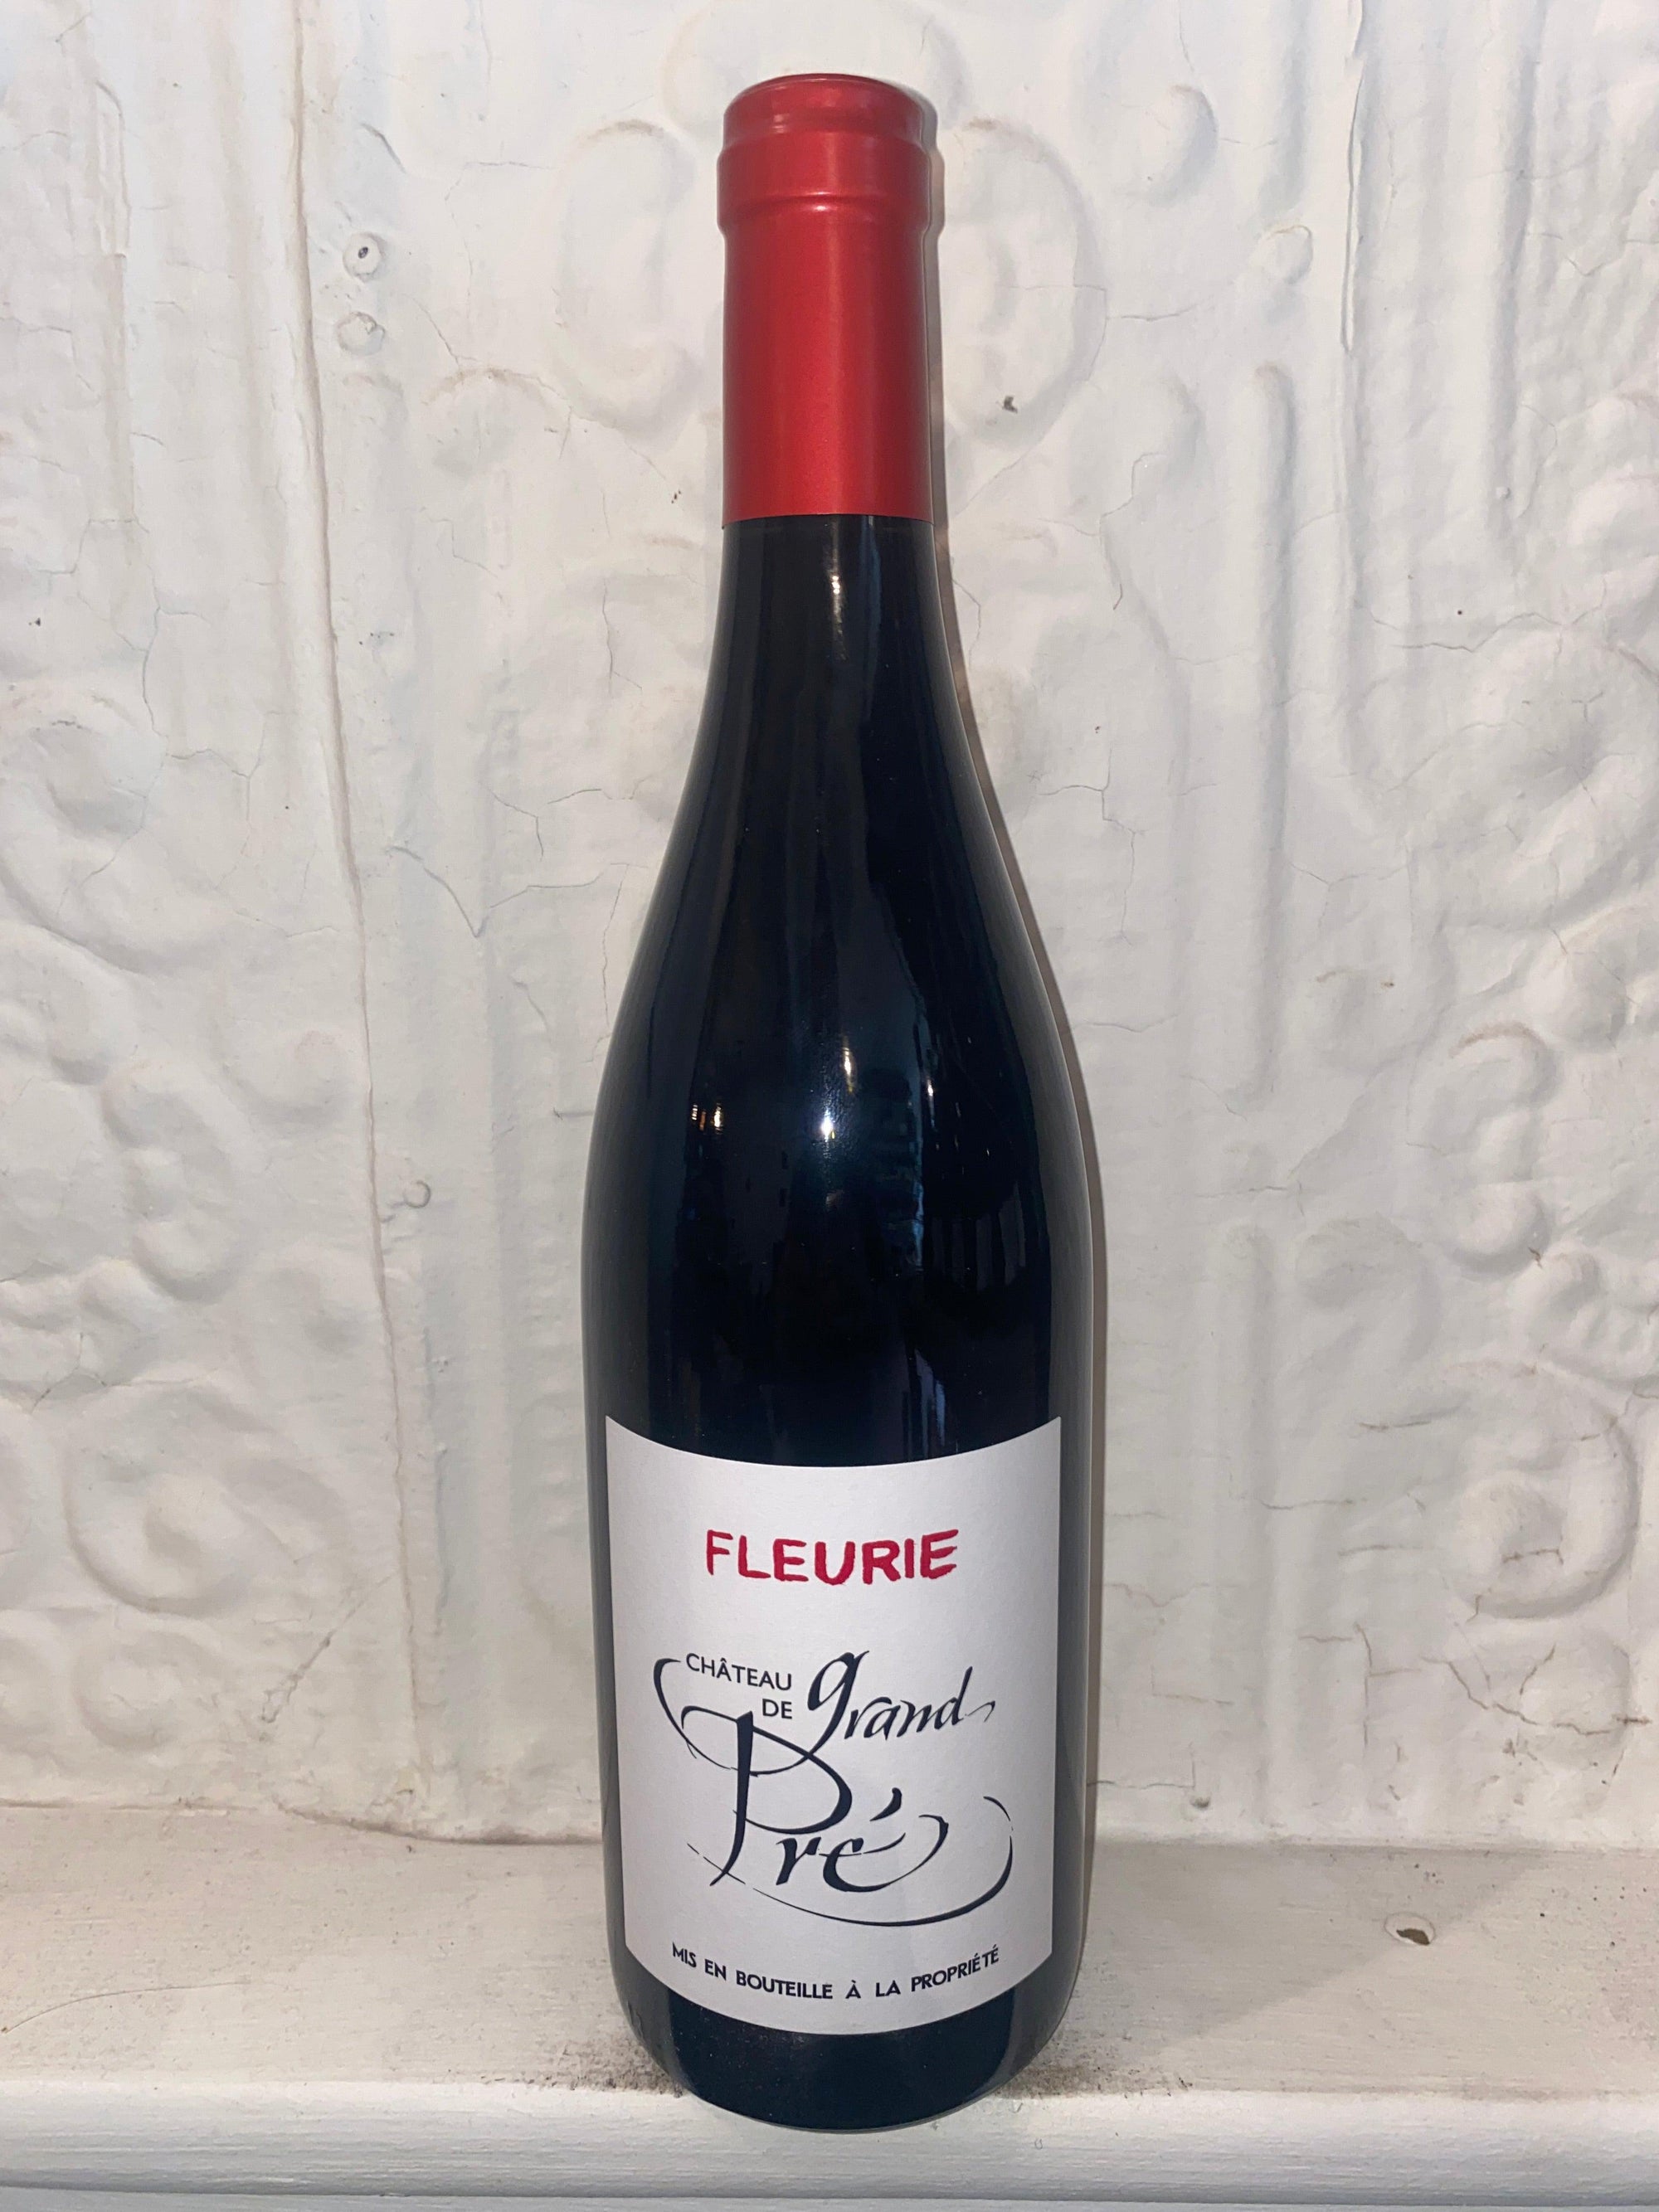 Fleurie, Chateau de Grand Pre 2019 (Beaujolais, France)-Wine-Bibber & Bell